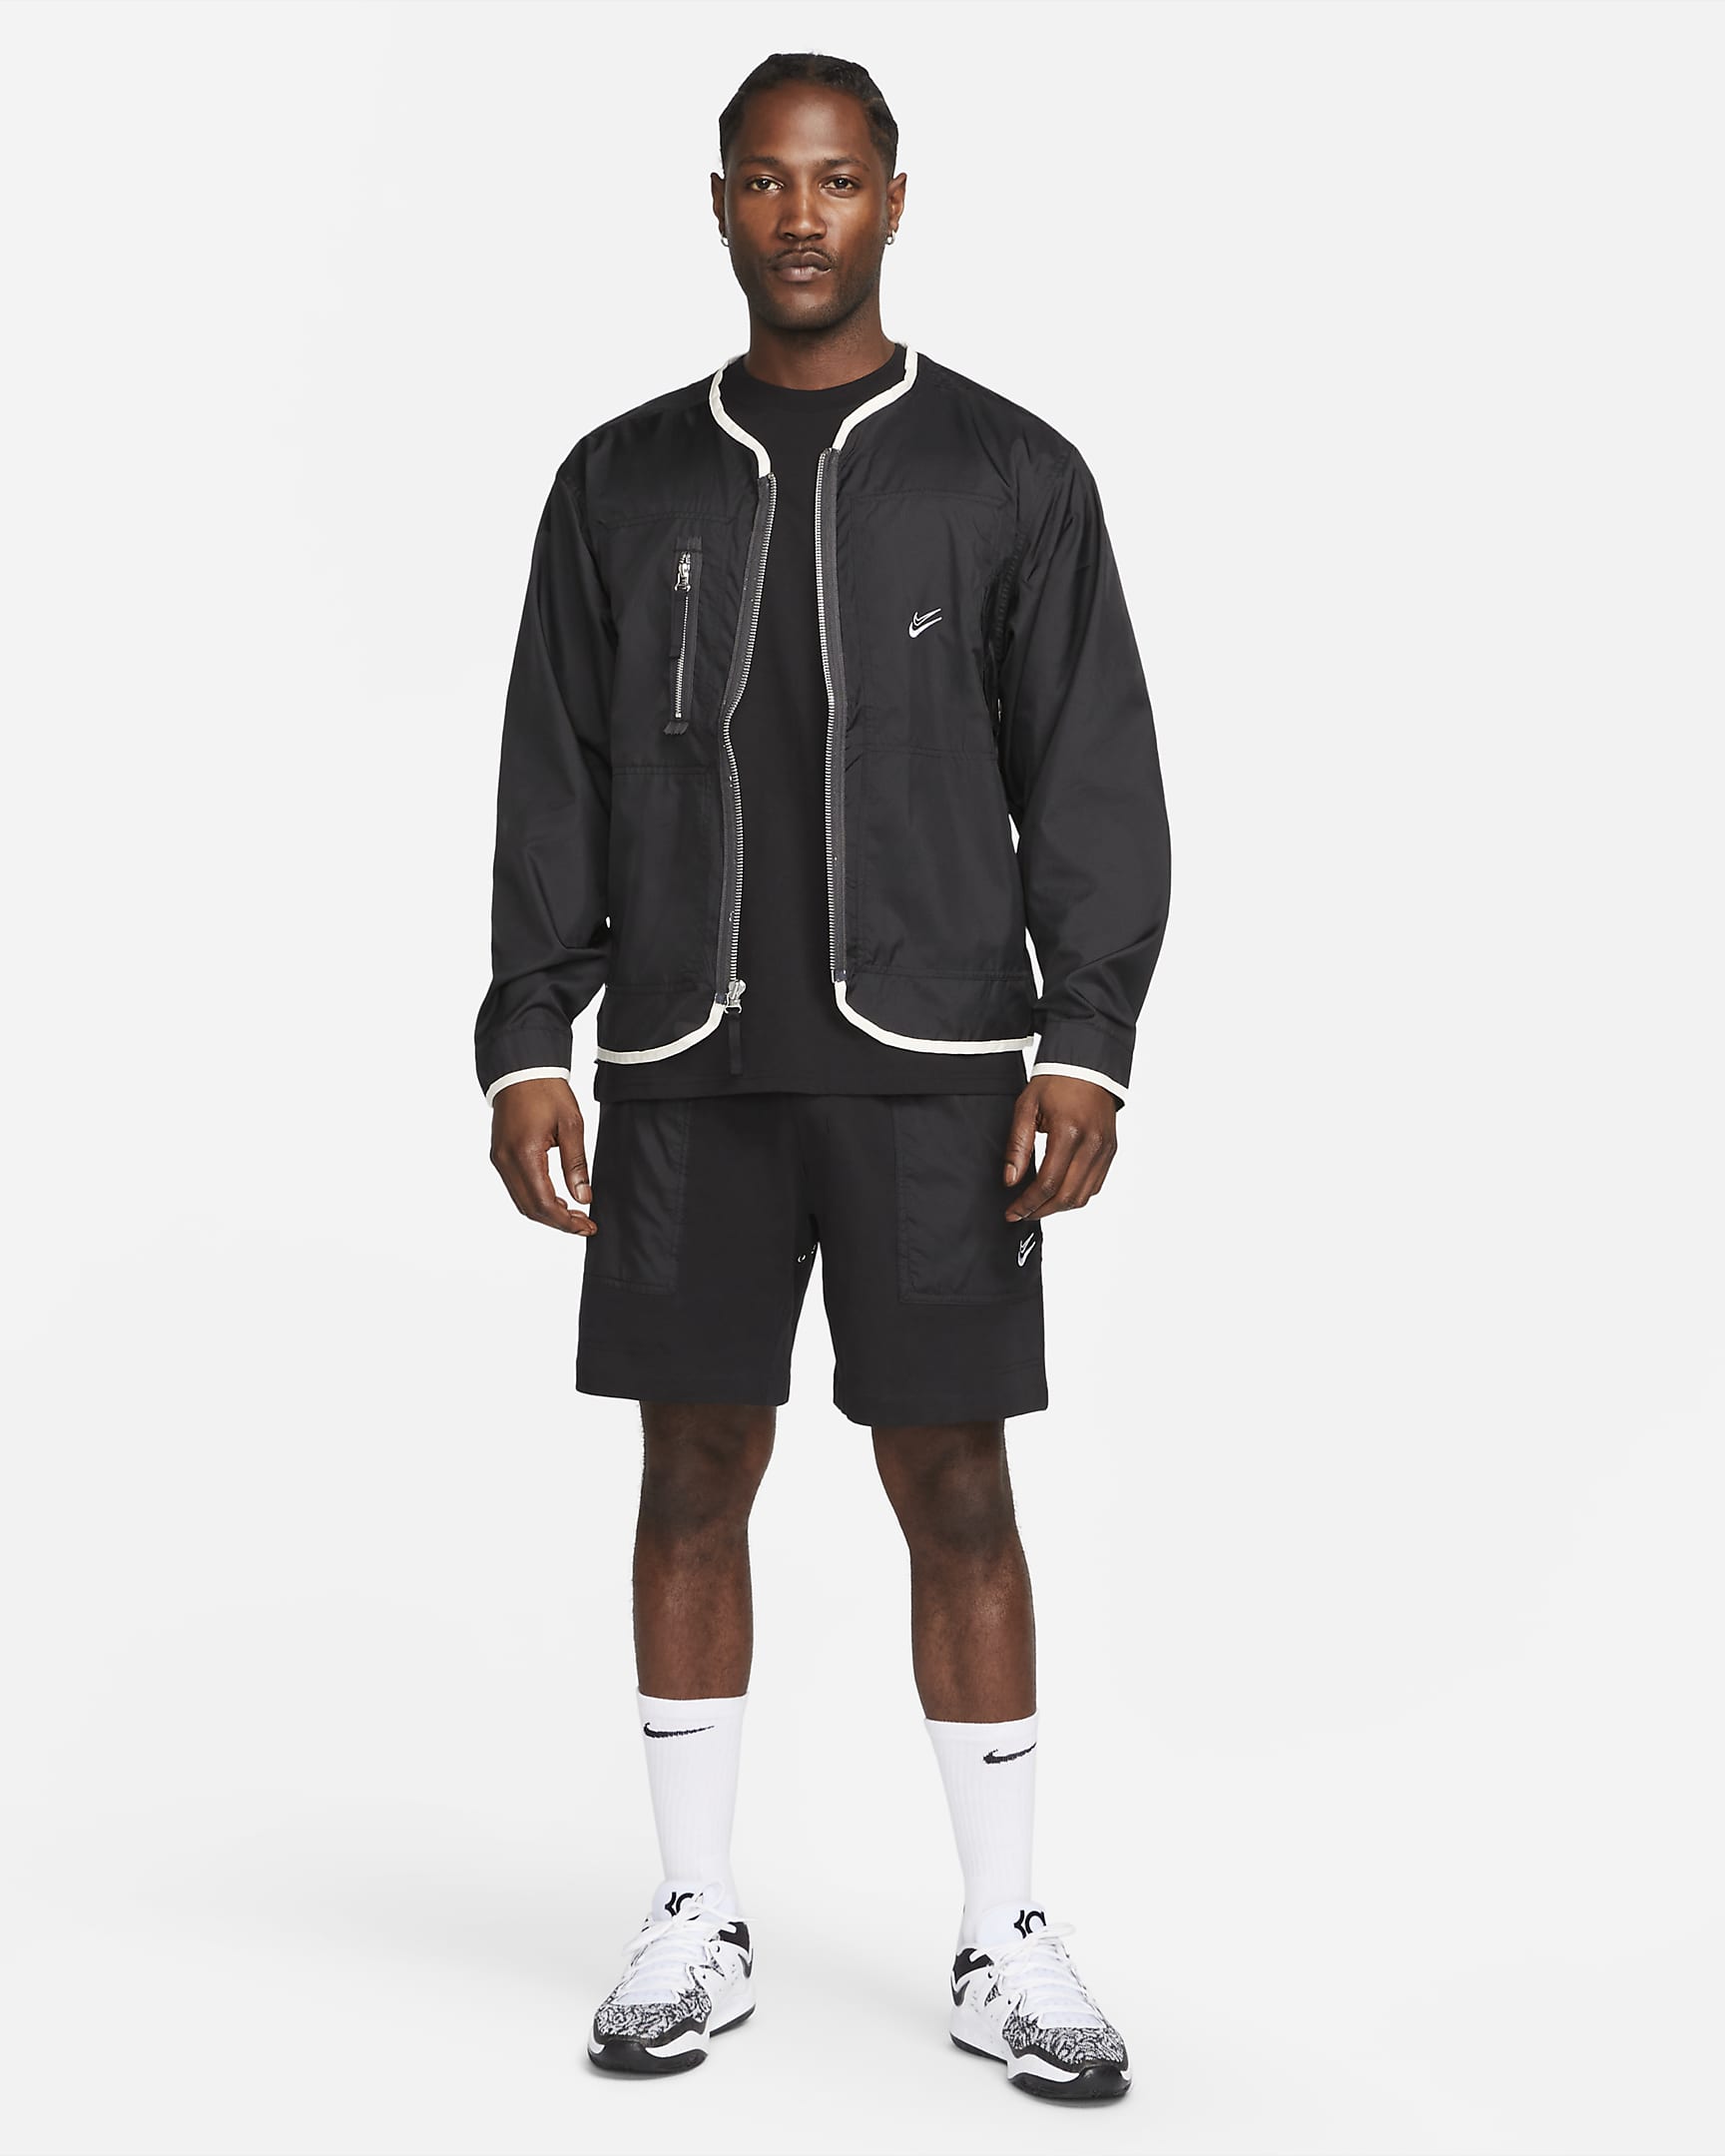 Kevin Durant Men's Lightweight Basketball Jacket. Nike BG